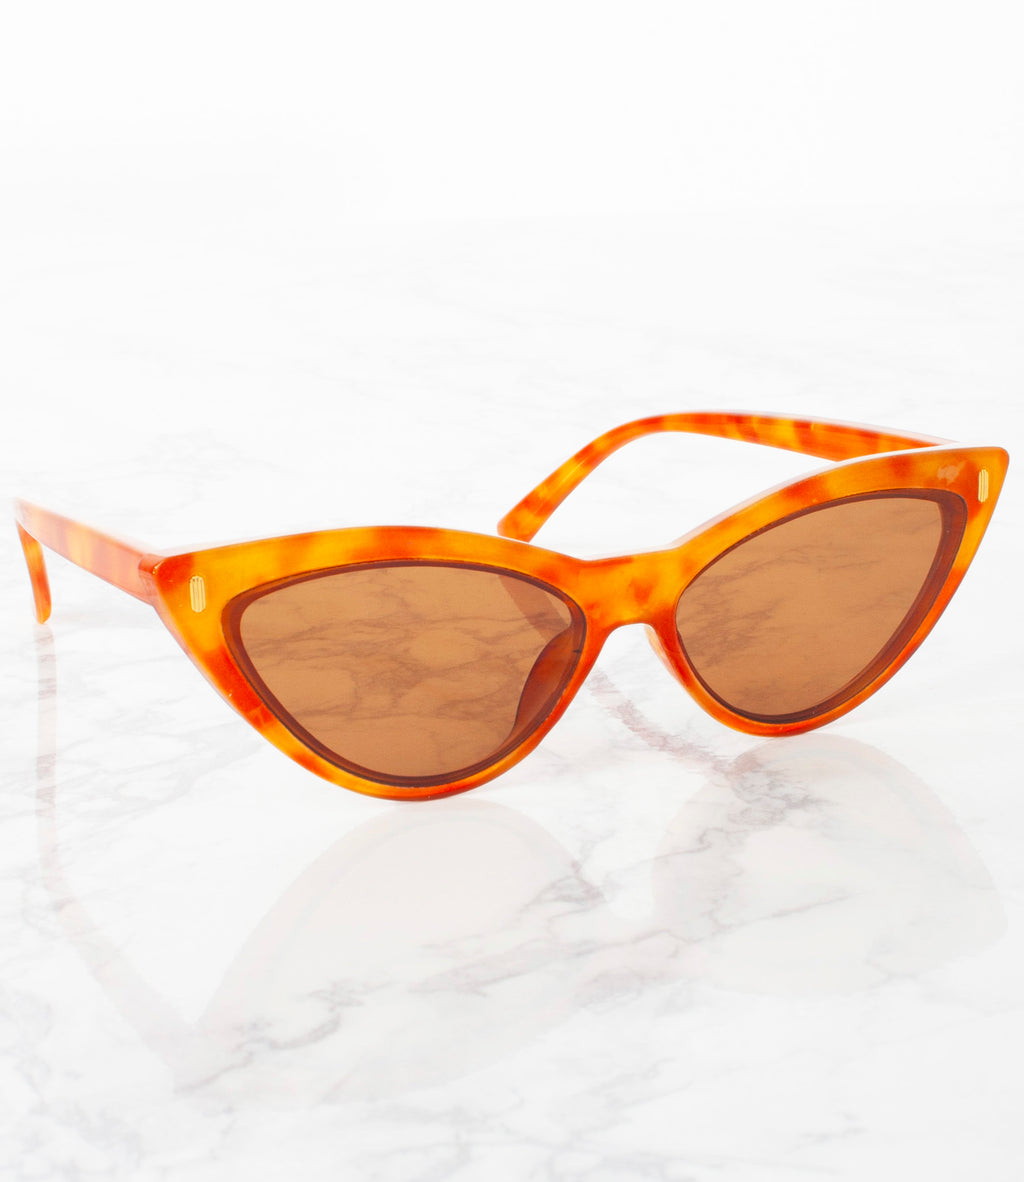 Wholesale Sunglasses | Wholesale Fashion Sunglasses in Bulk